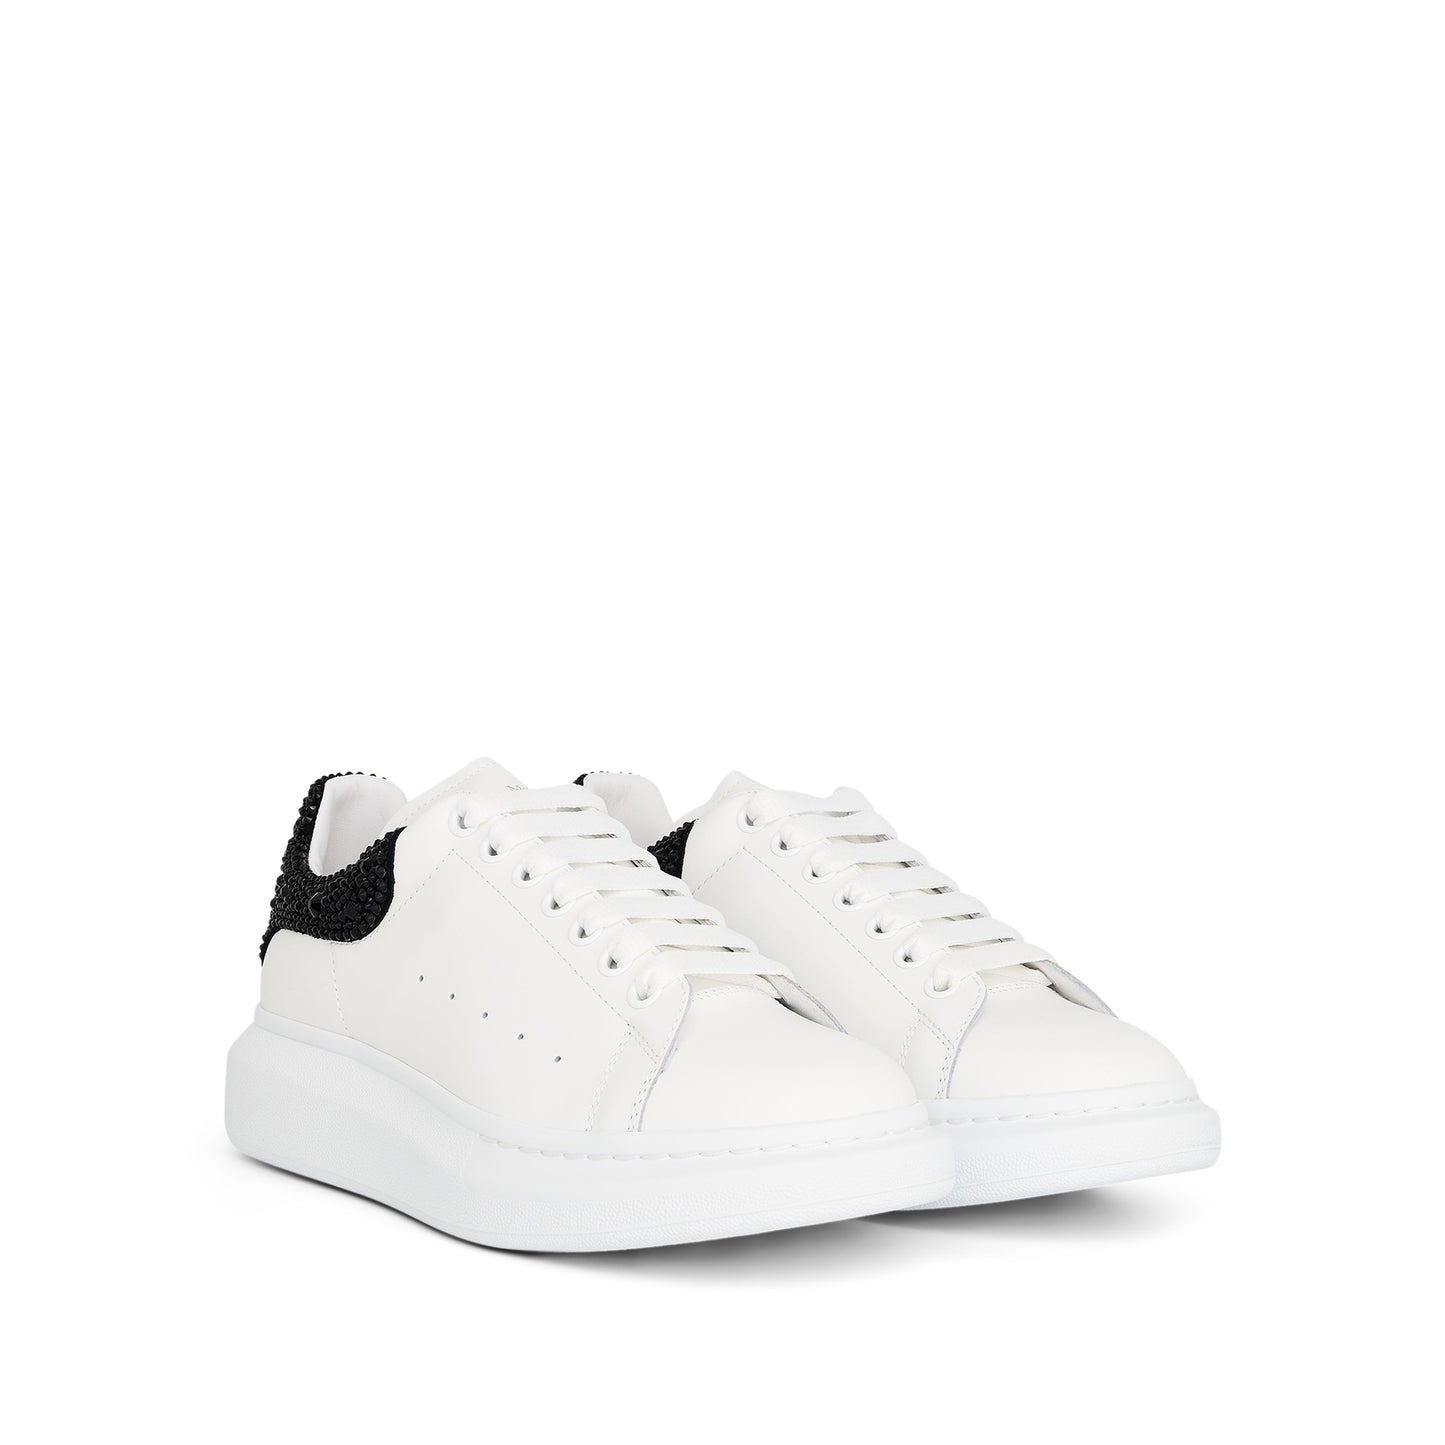 Larry Oversized Sneaker in White/Black/Jet